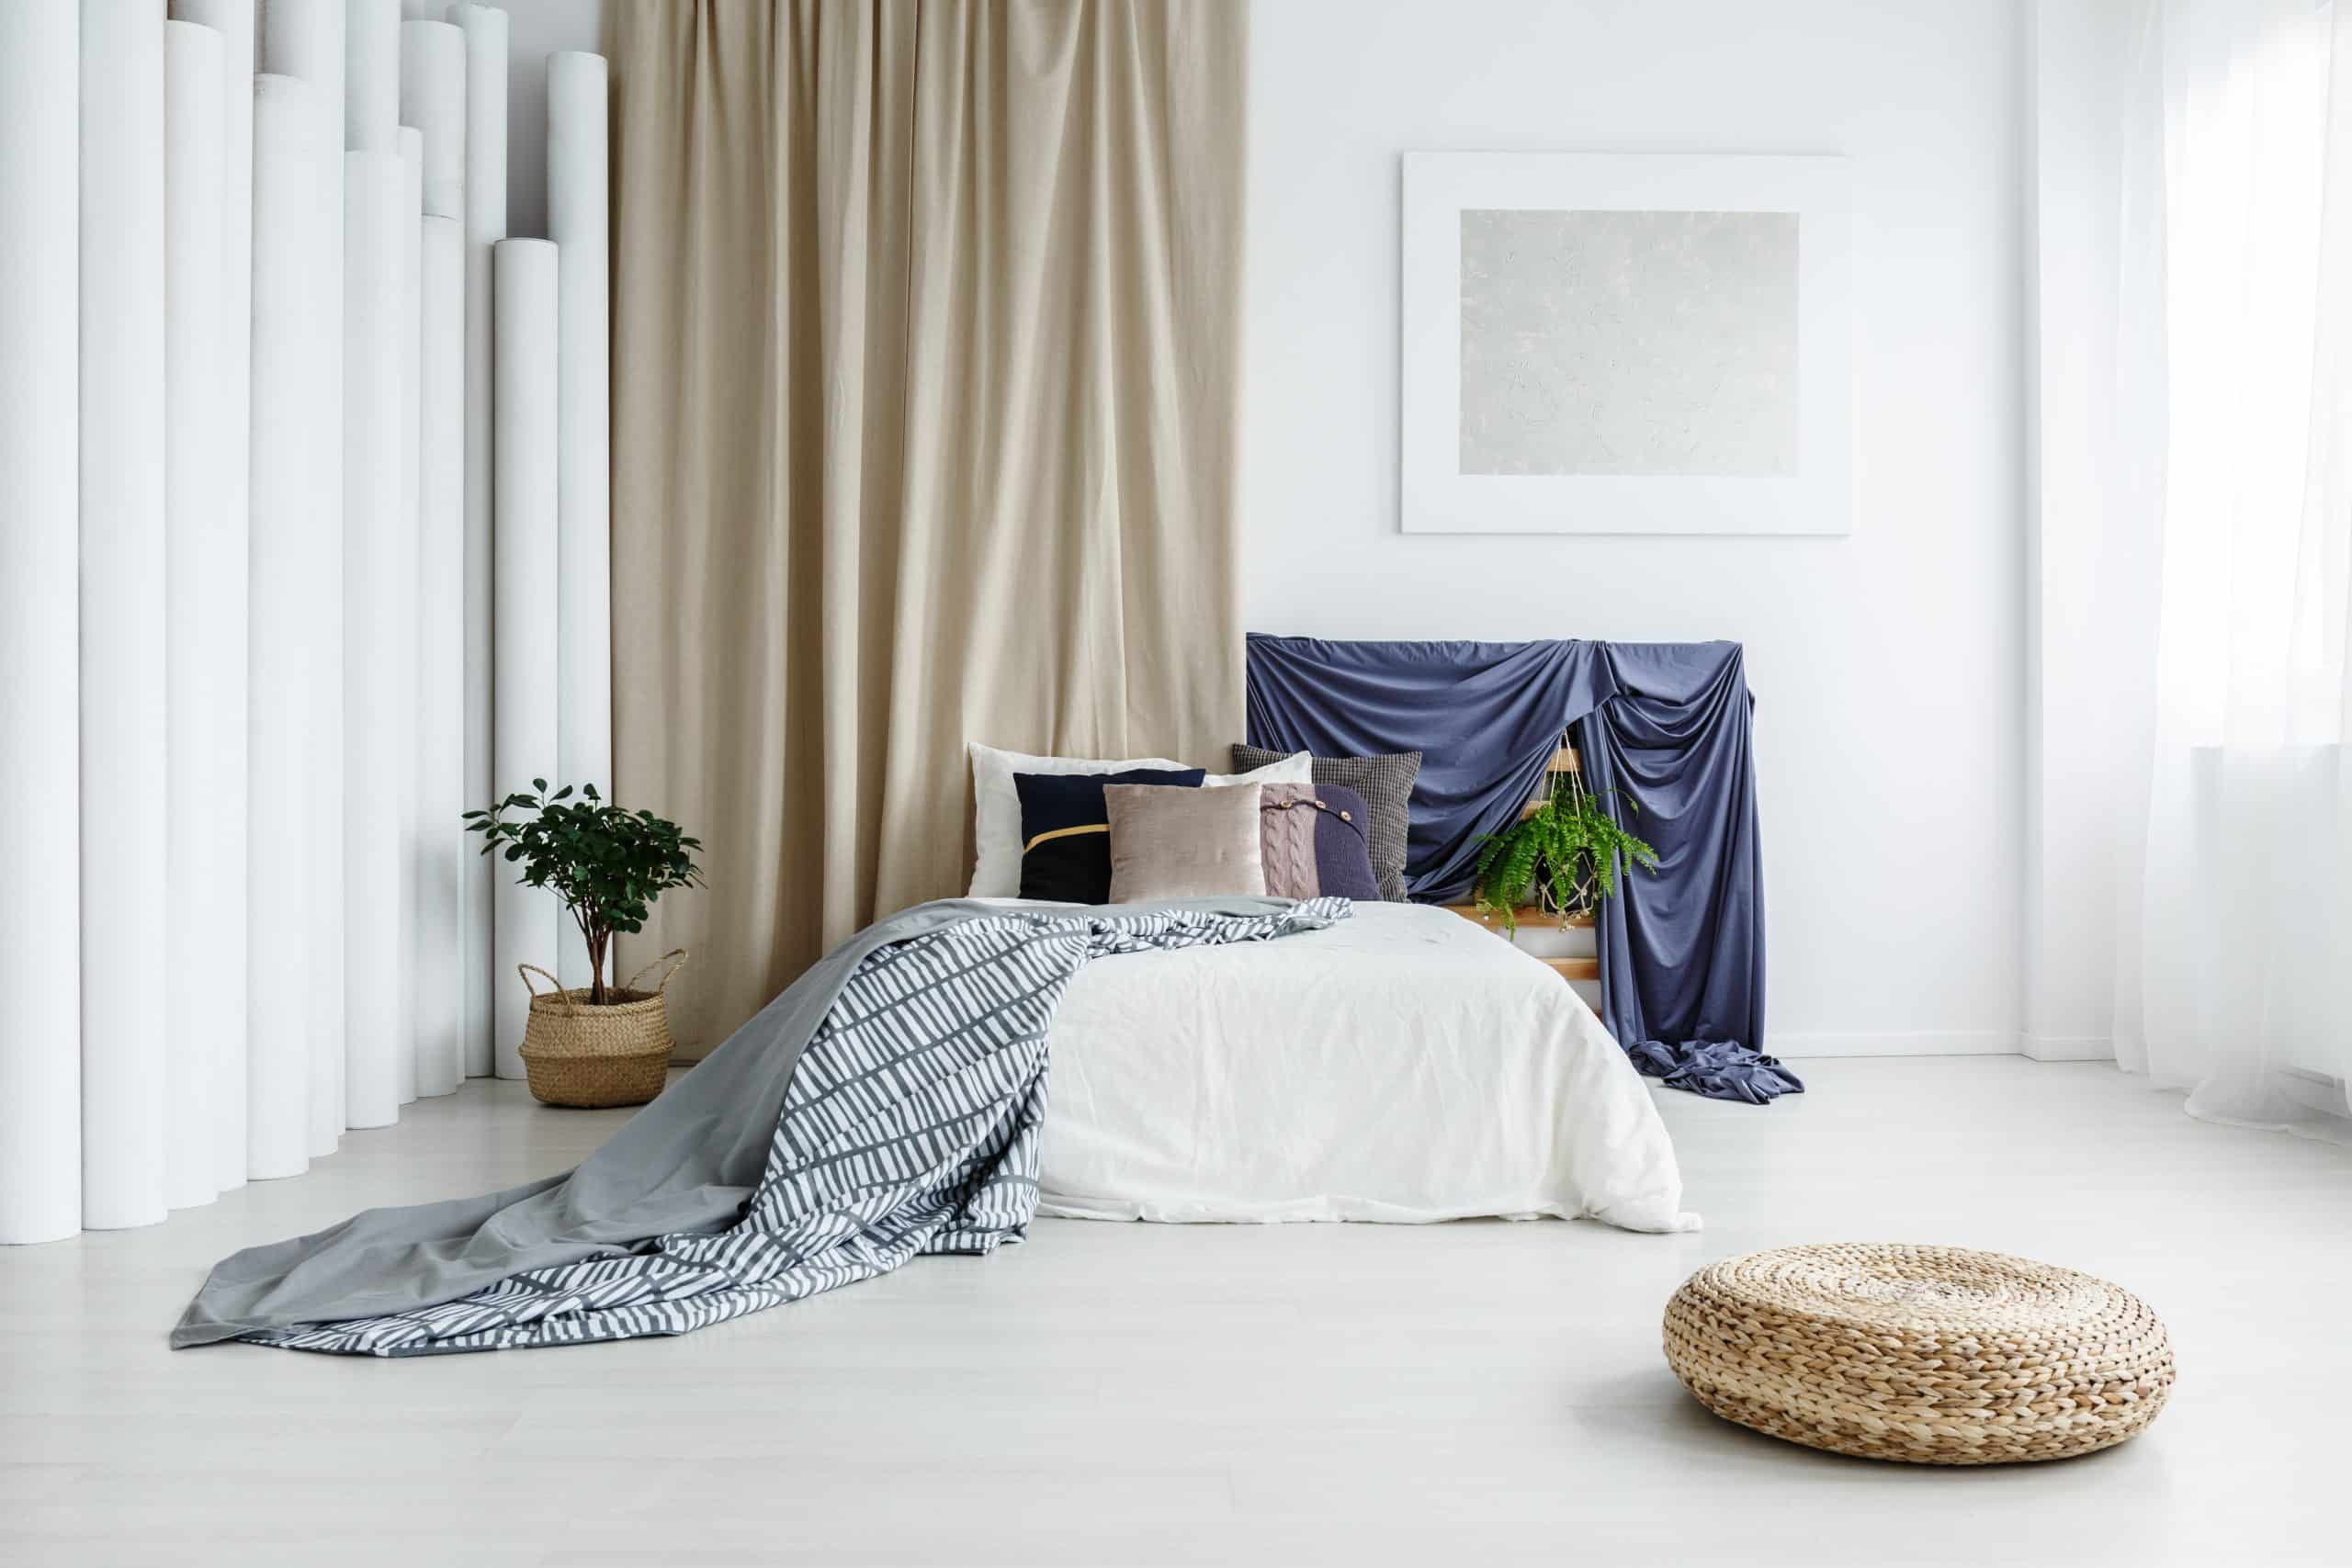 home decor ideas include soft textiles